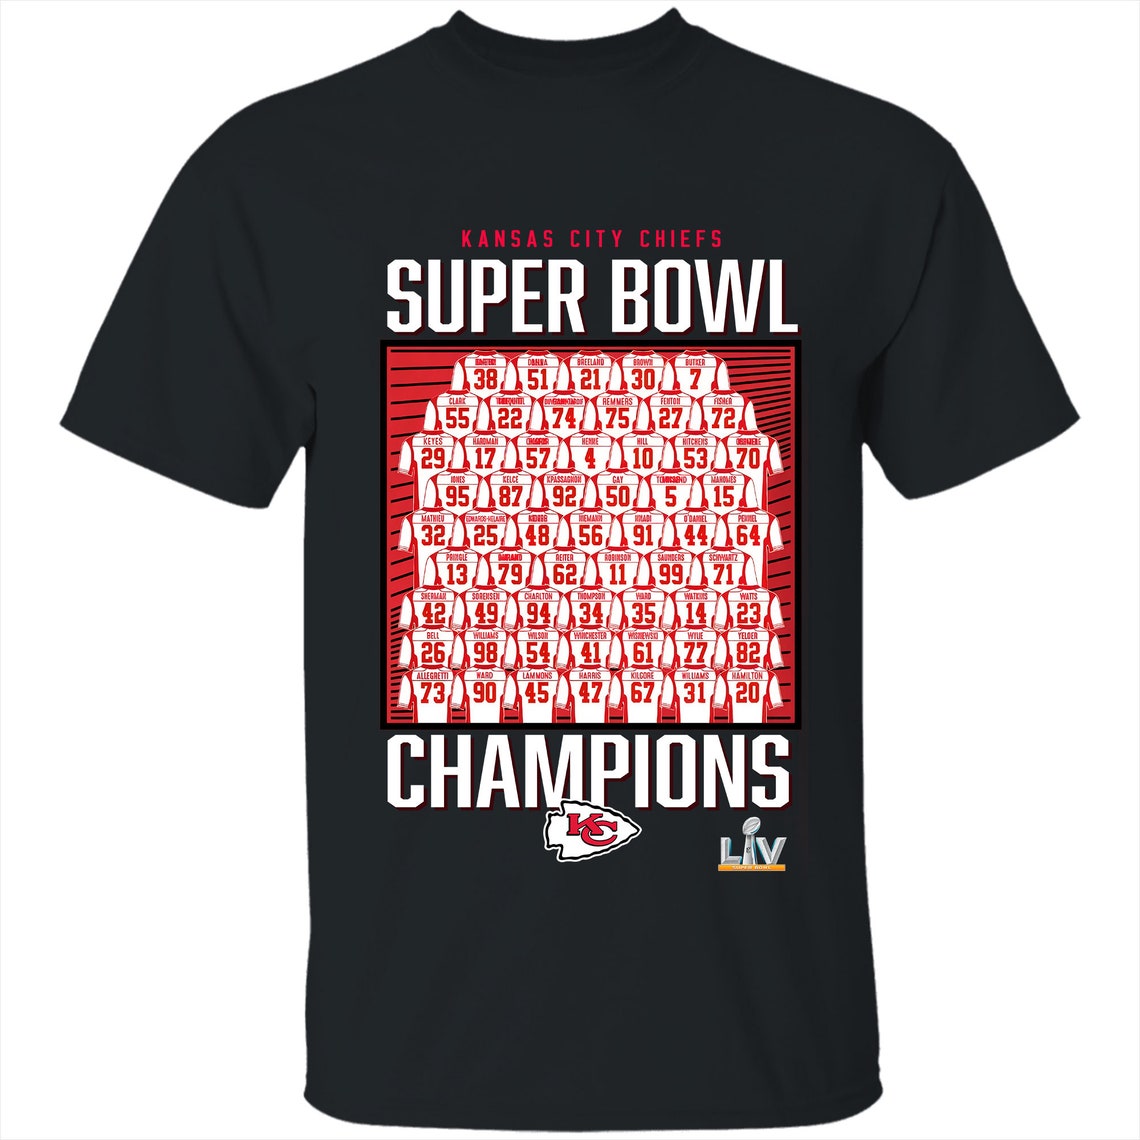 Super Bowl Lviii Shirts - Image to u